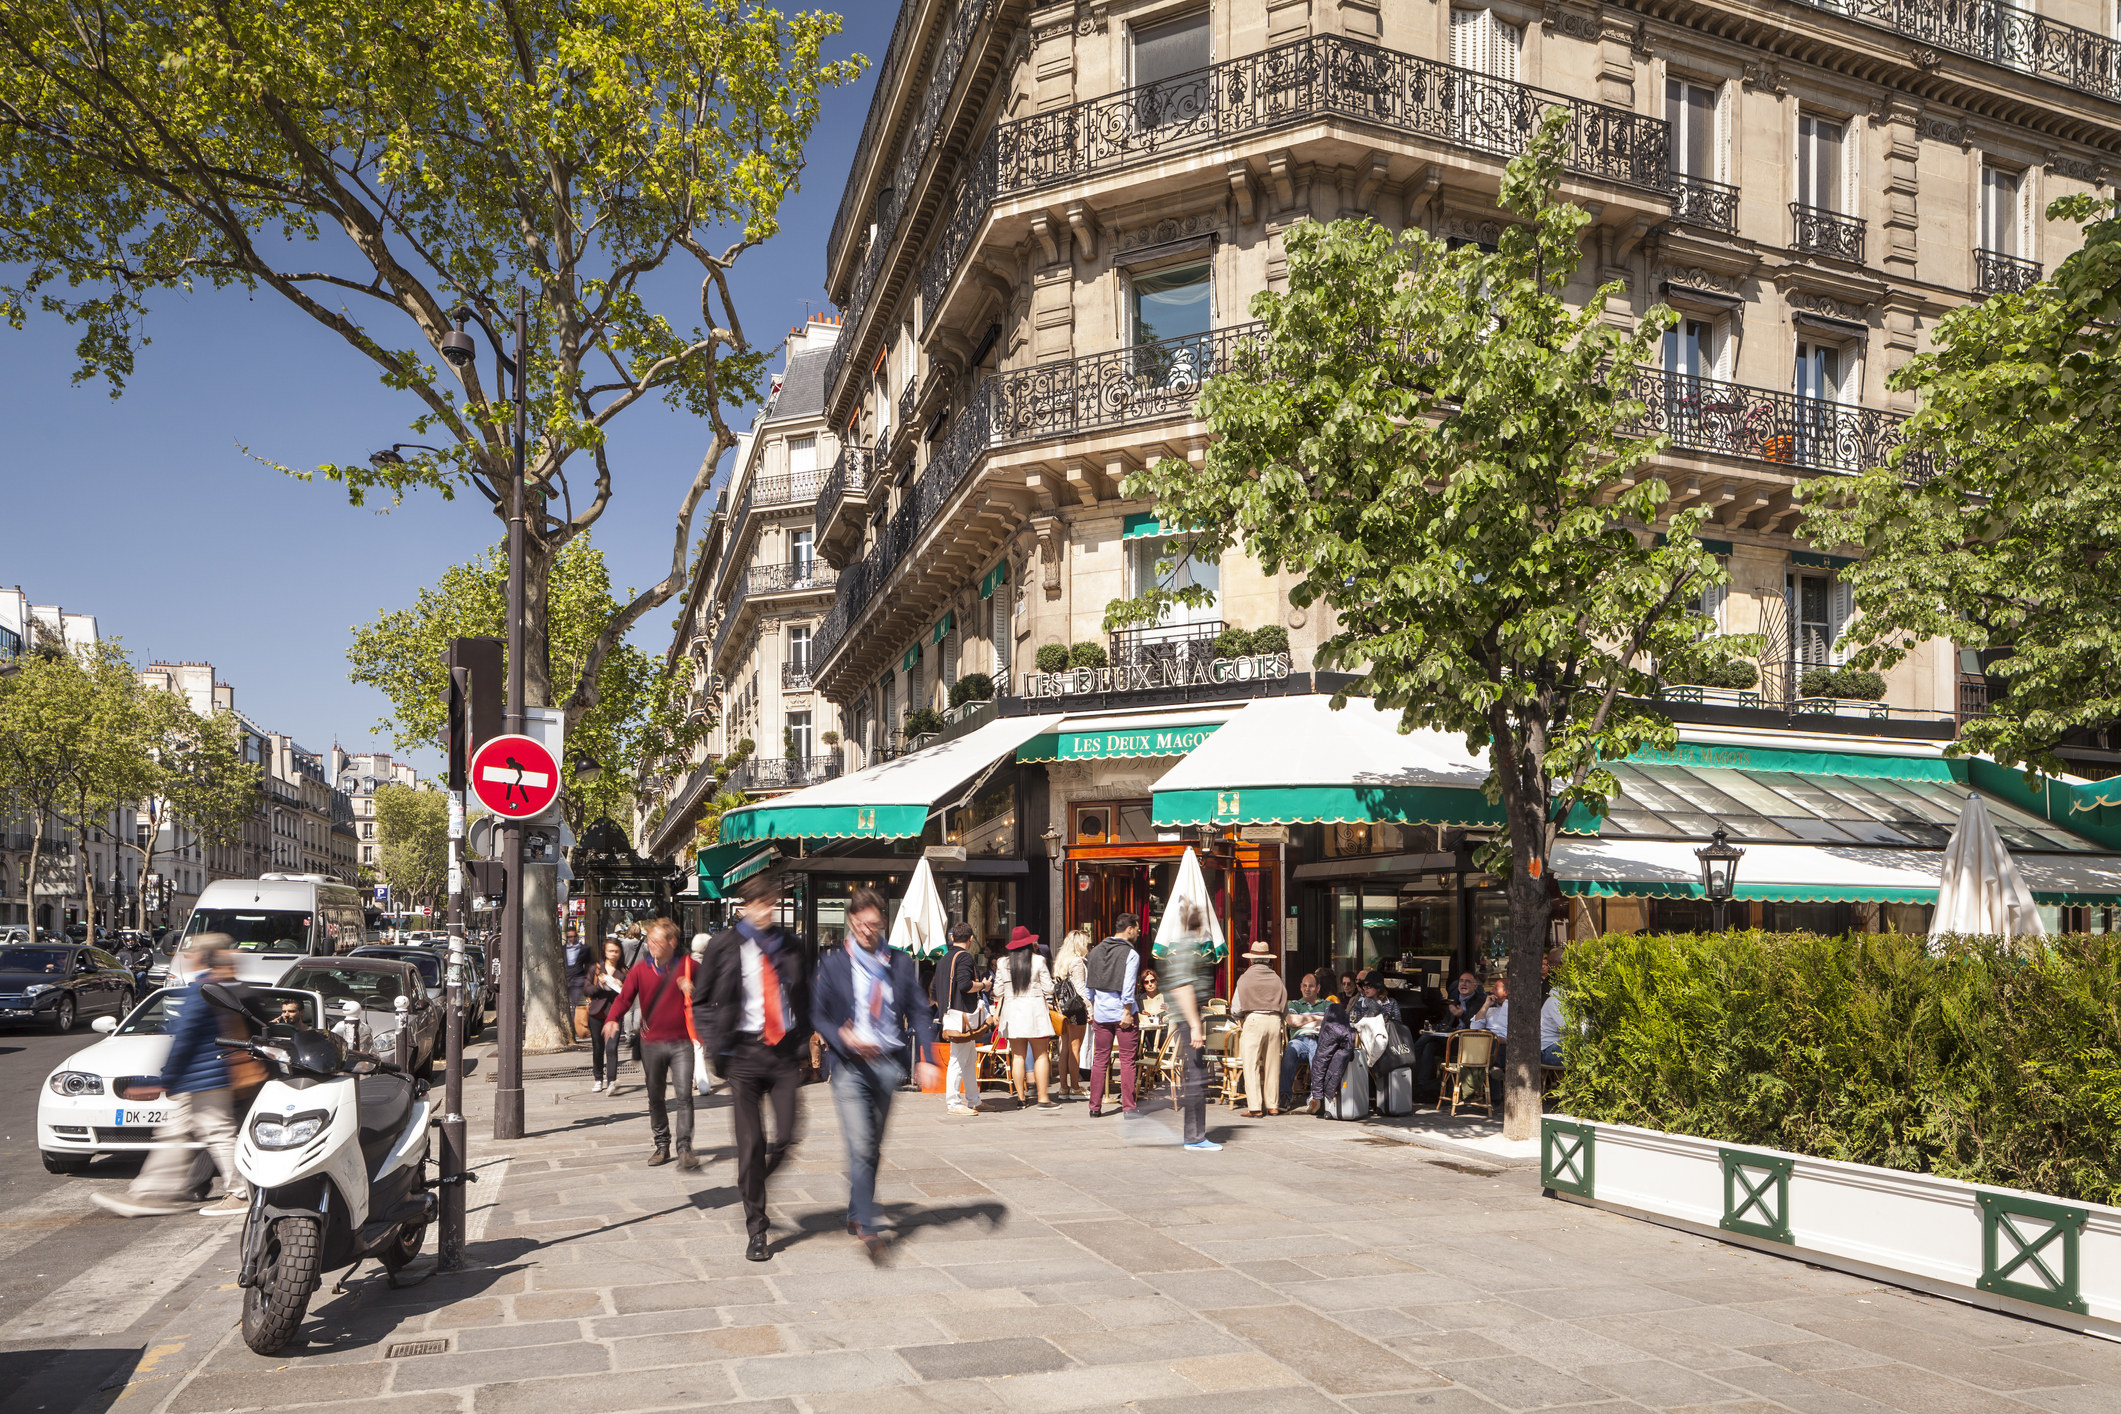 People walking in a Parisian neighborhood